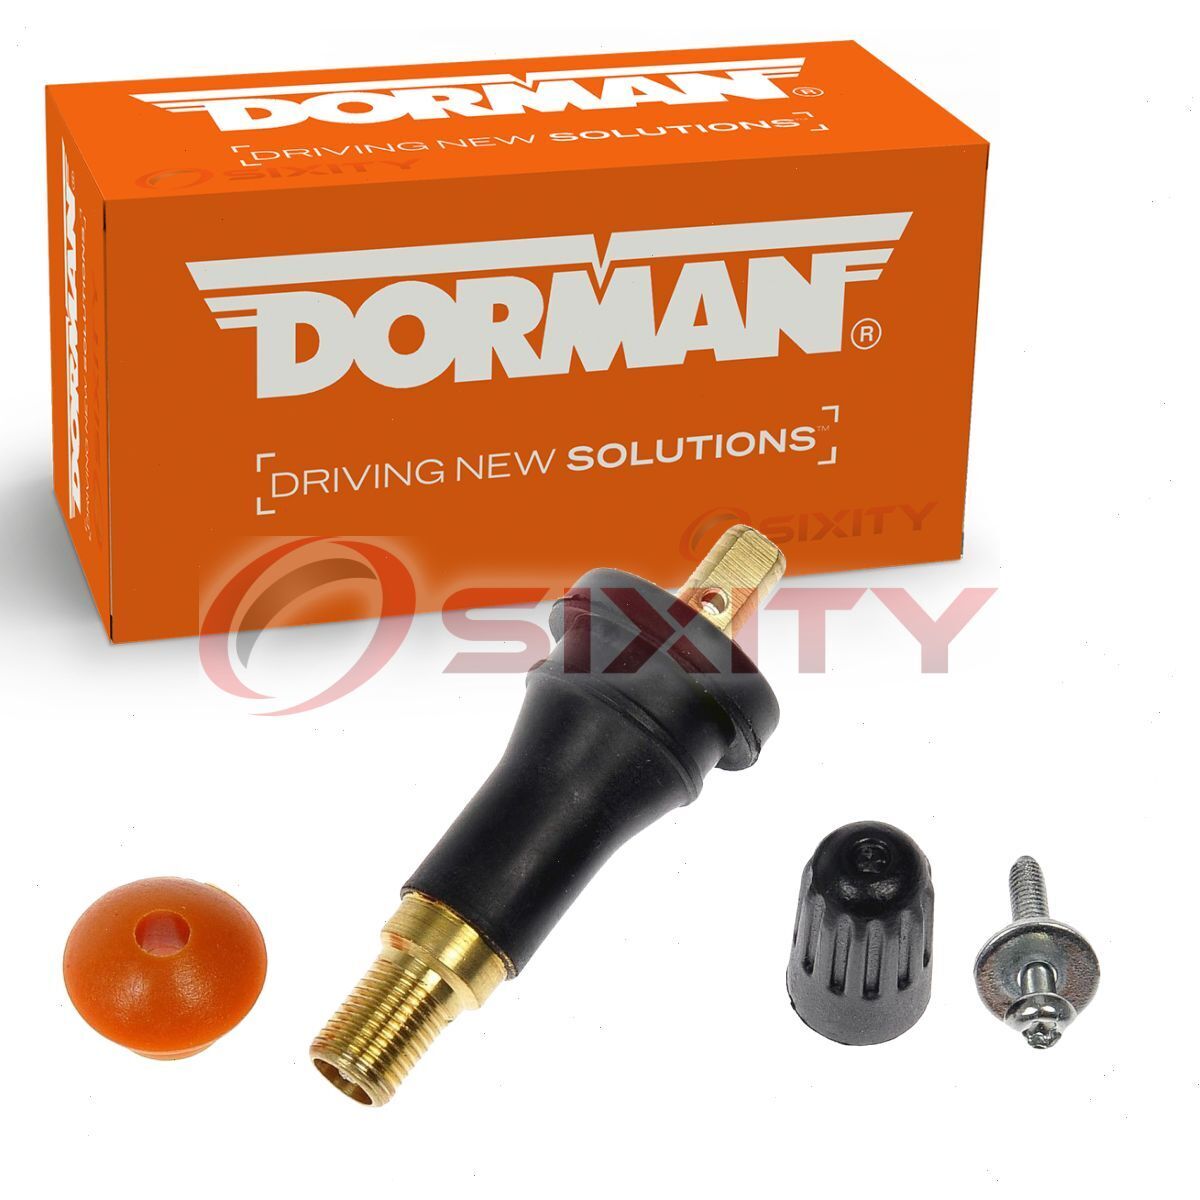 Dorman TPMS Valve Kit for 1999 BMW 318ti Tire Pressure Monitoring System  dz